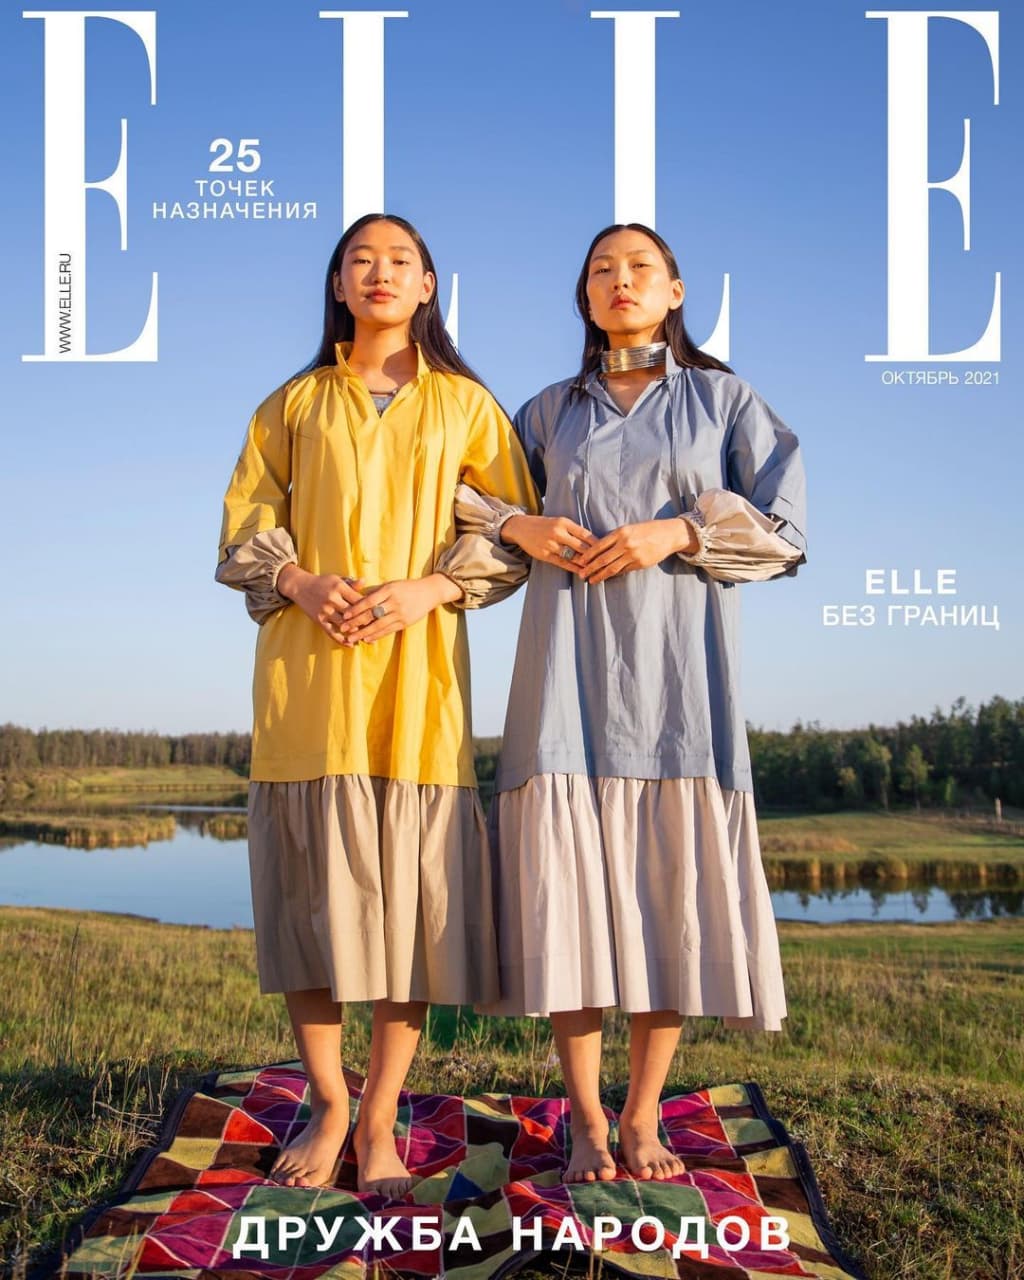 Фотографию якутянок поместили на обложку журнала Elle Russia